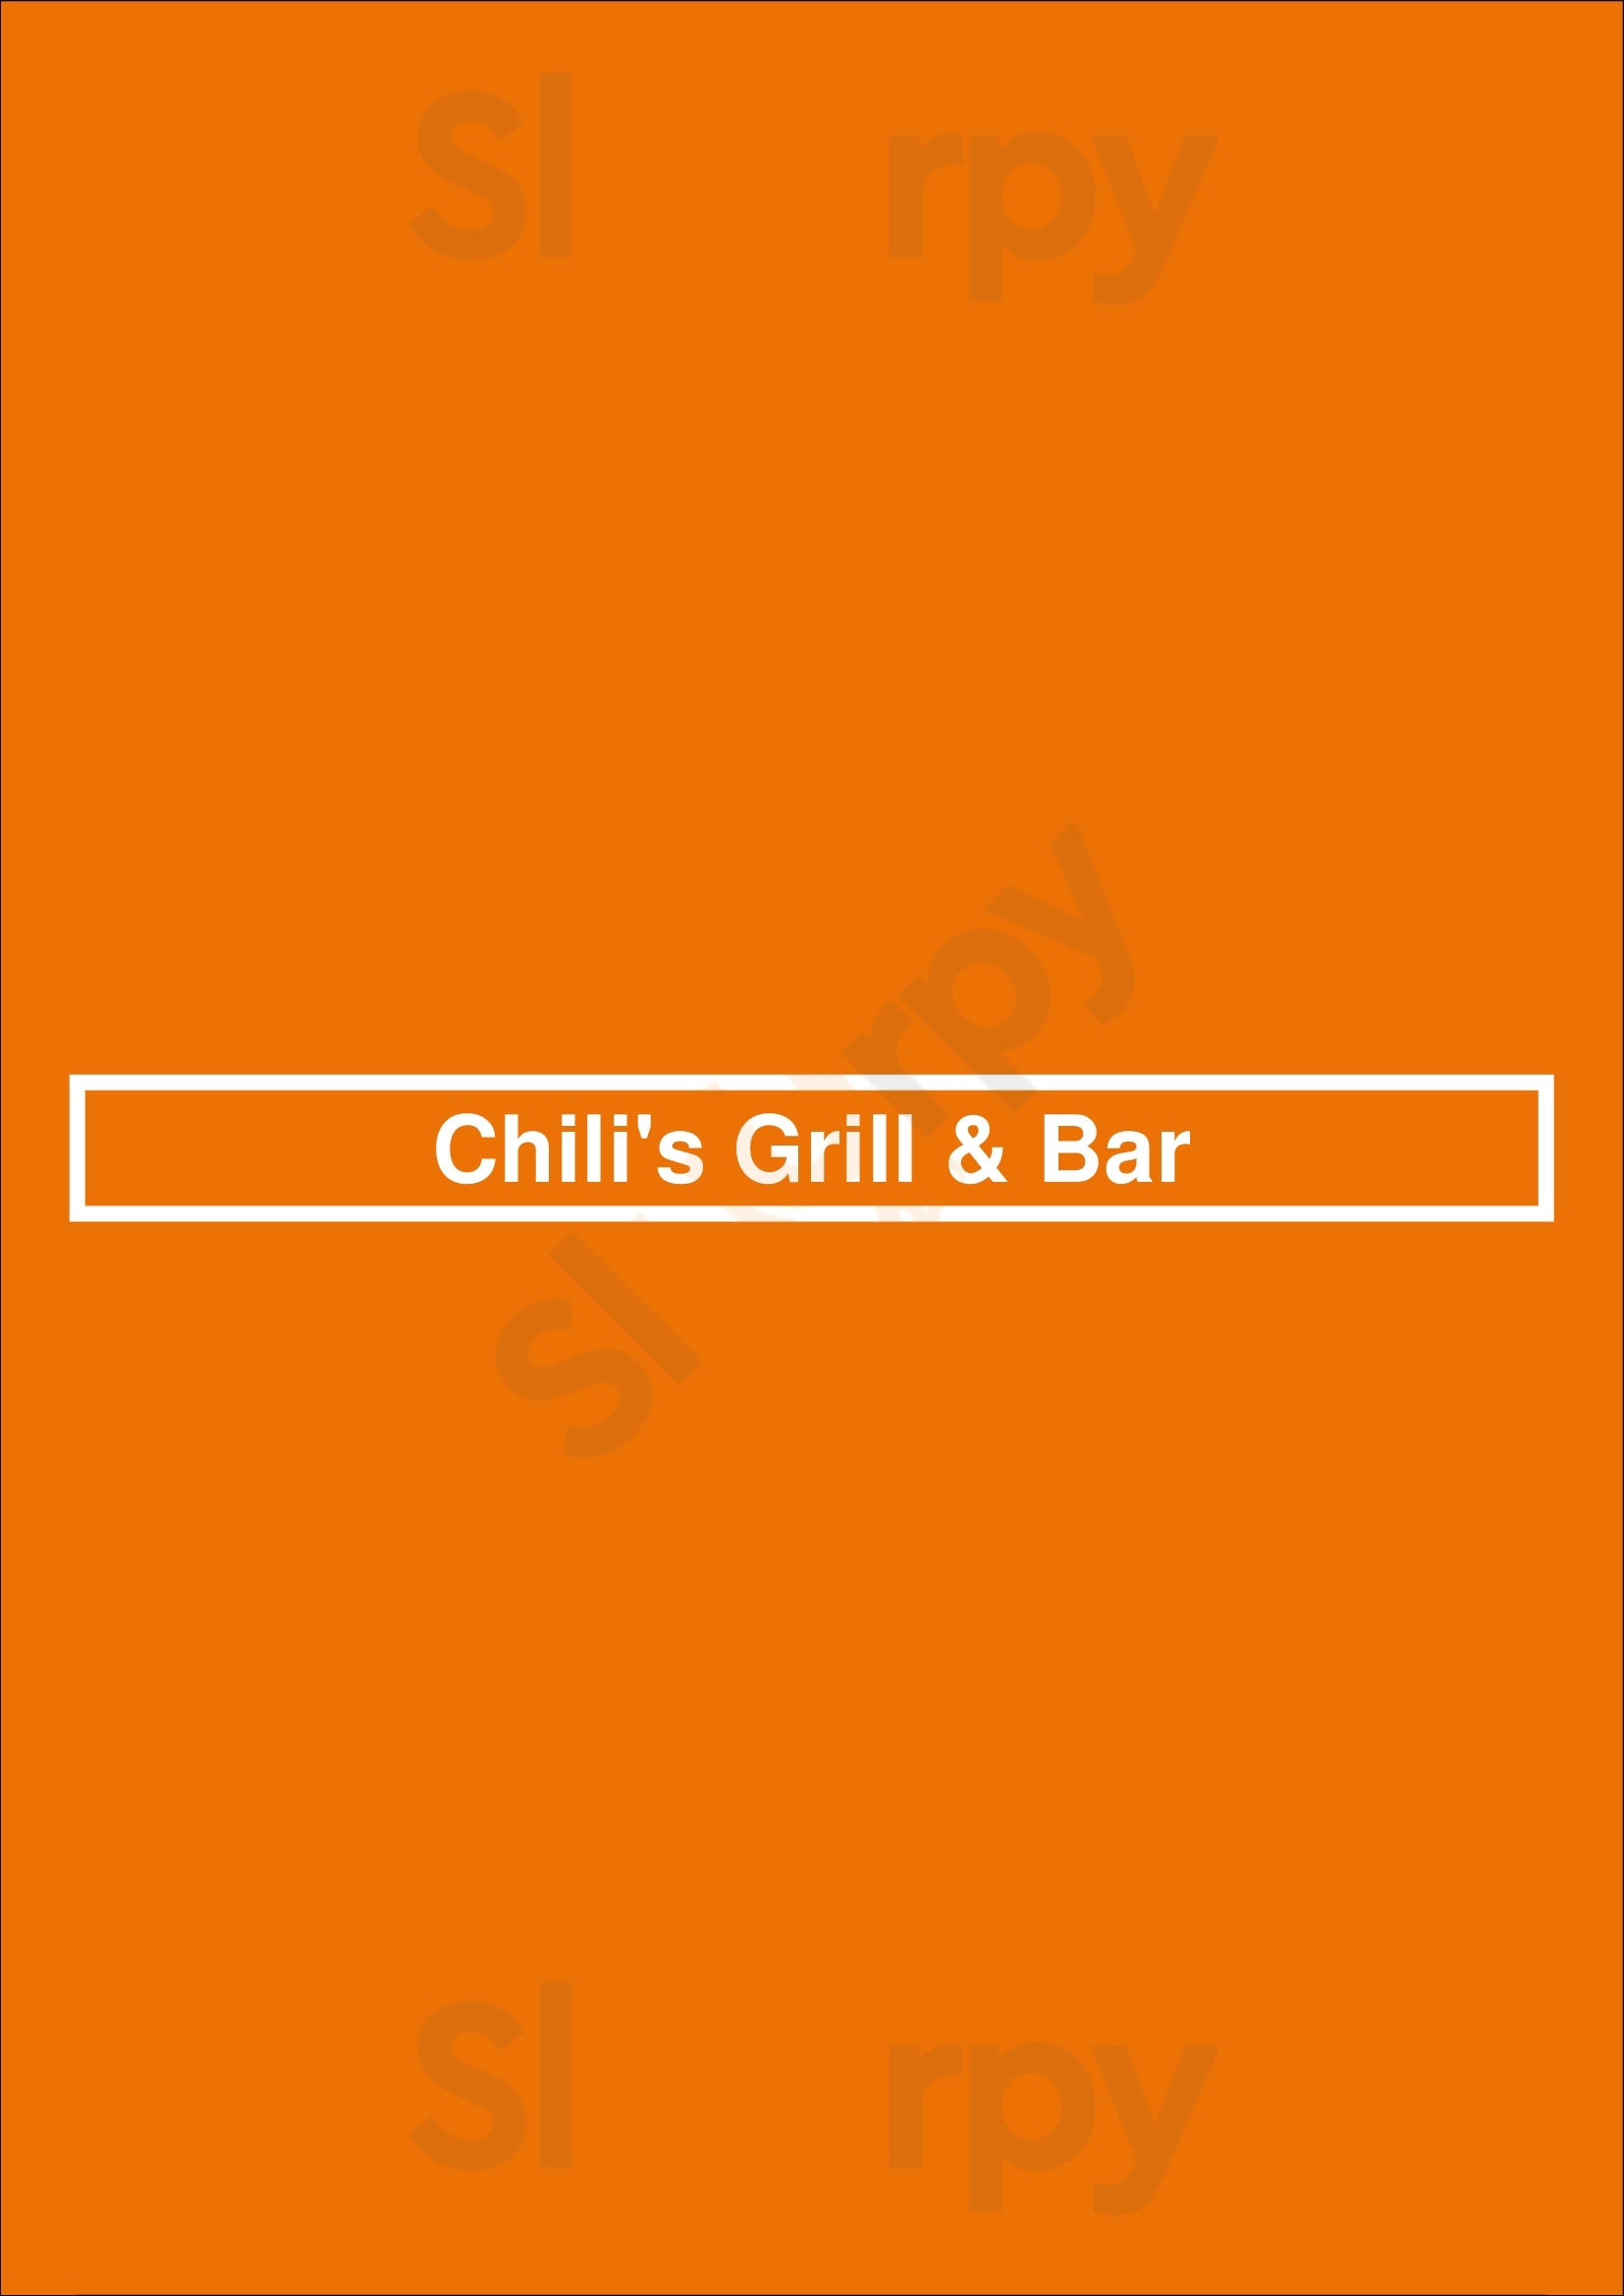 Chili's Grill & Bar Smyrna Menu - 1